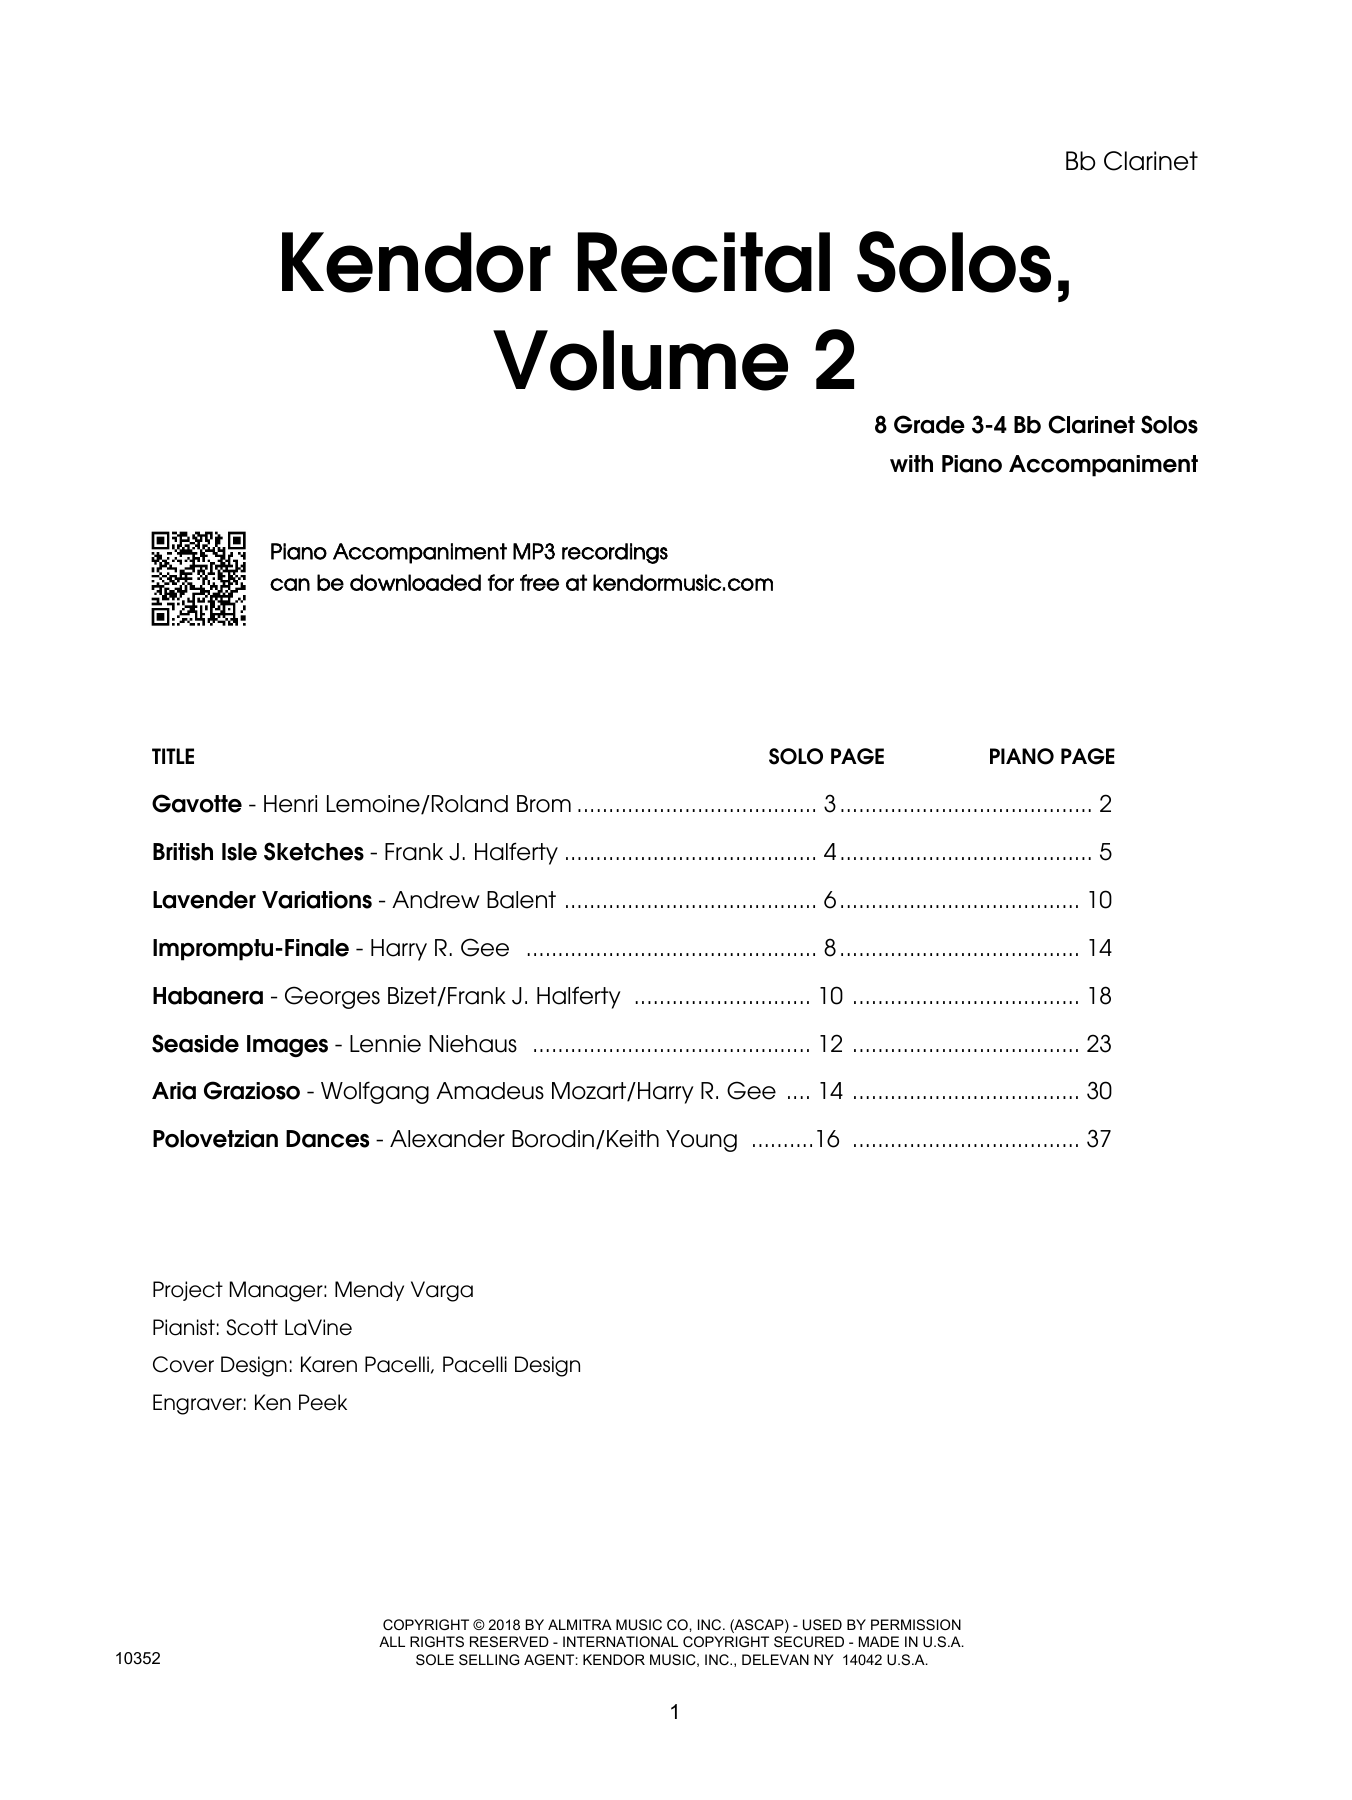 Download Various Kendor Recital Solos, Volume 2 - Bb Cla Sheet Music